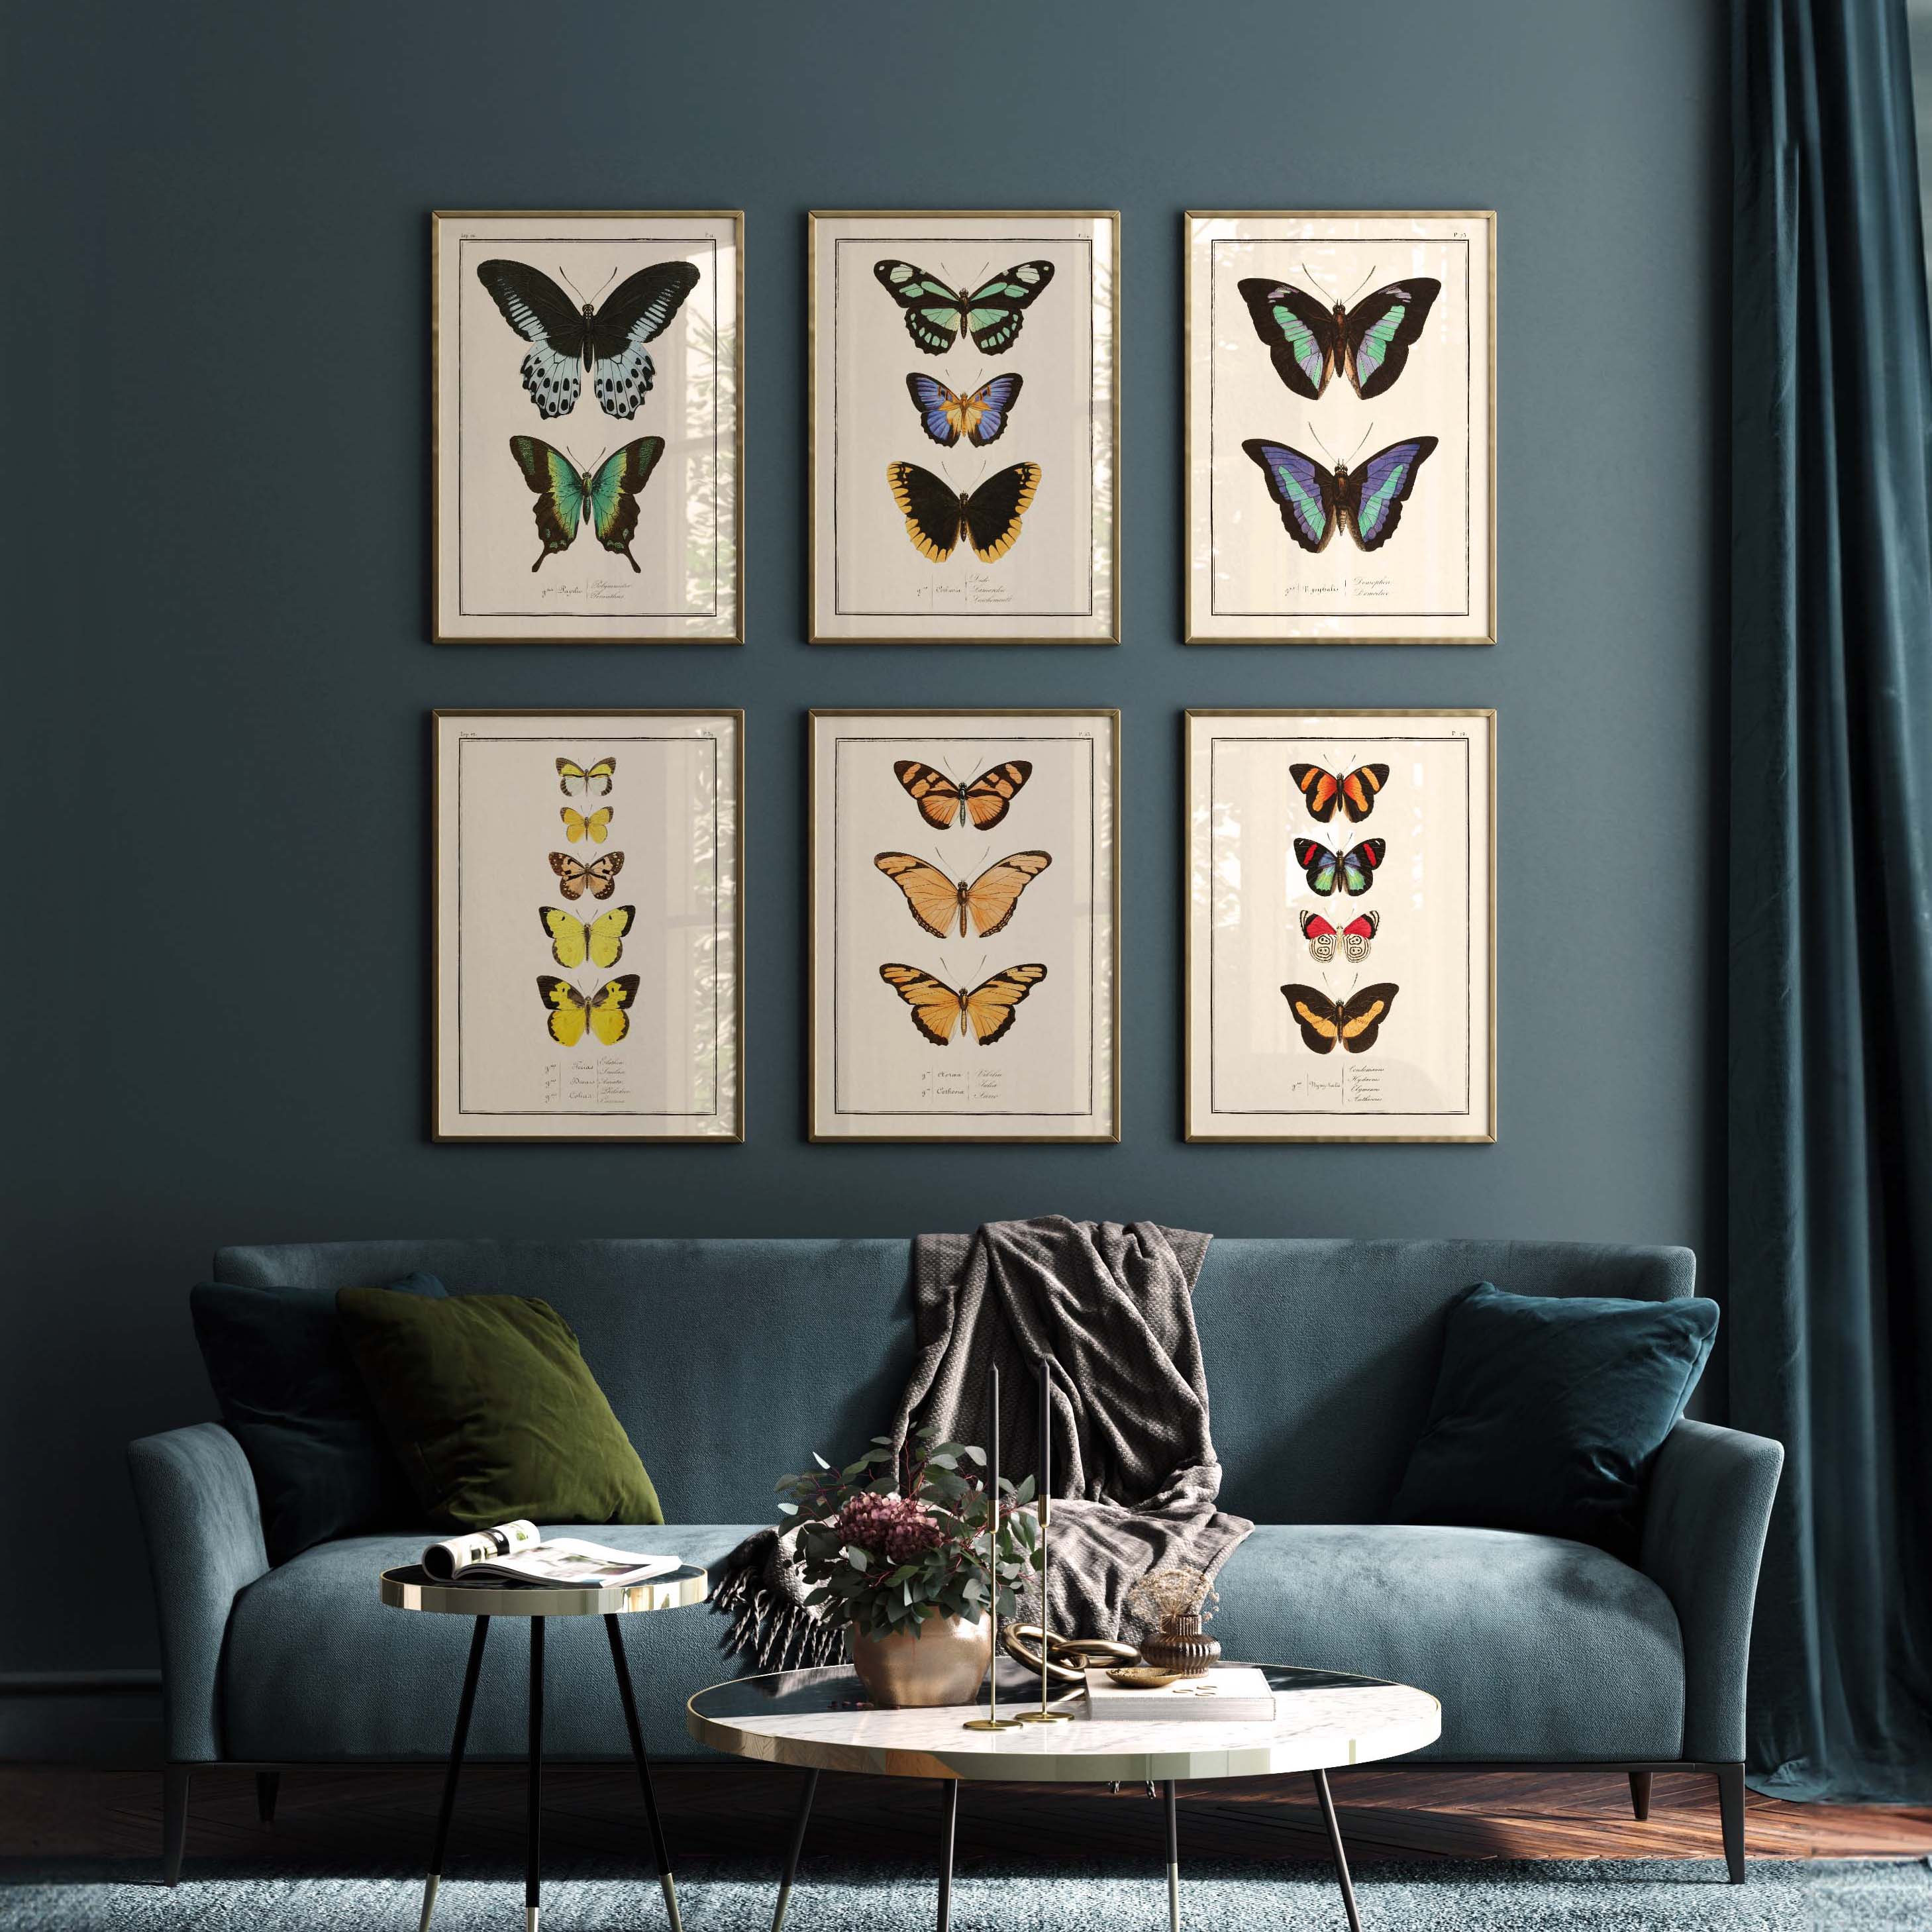 Planche d'entomologie Papillons - N°39-oneart.fr